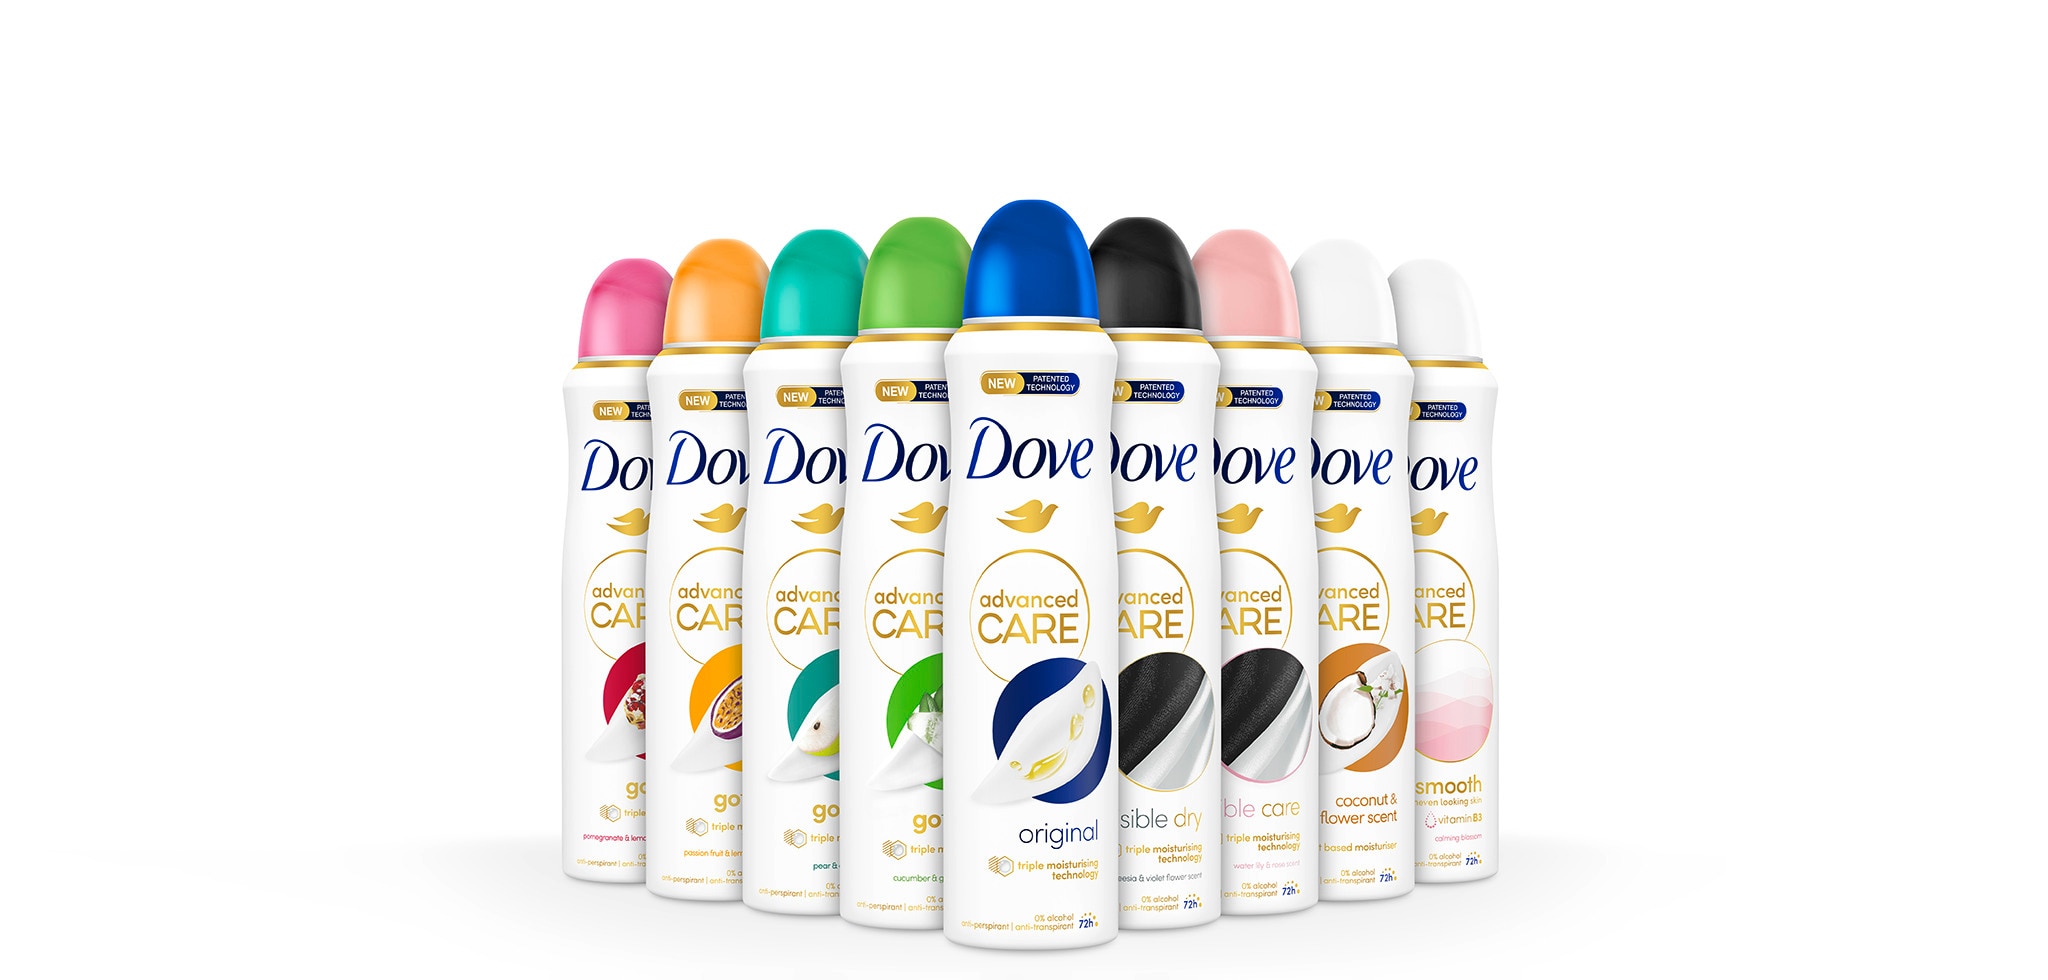 Dove Spray antiperspirants and deodorants